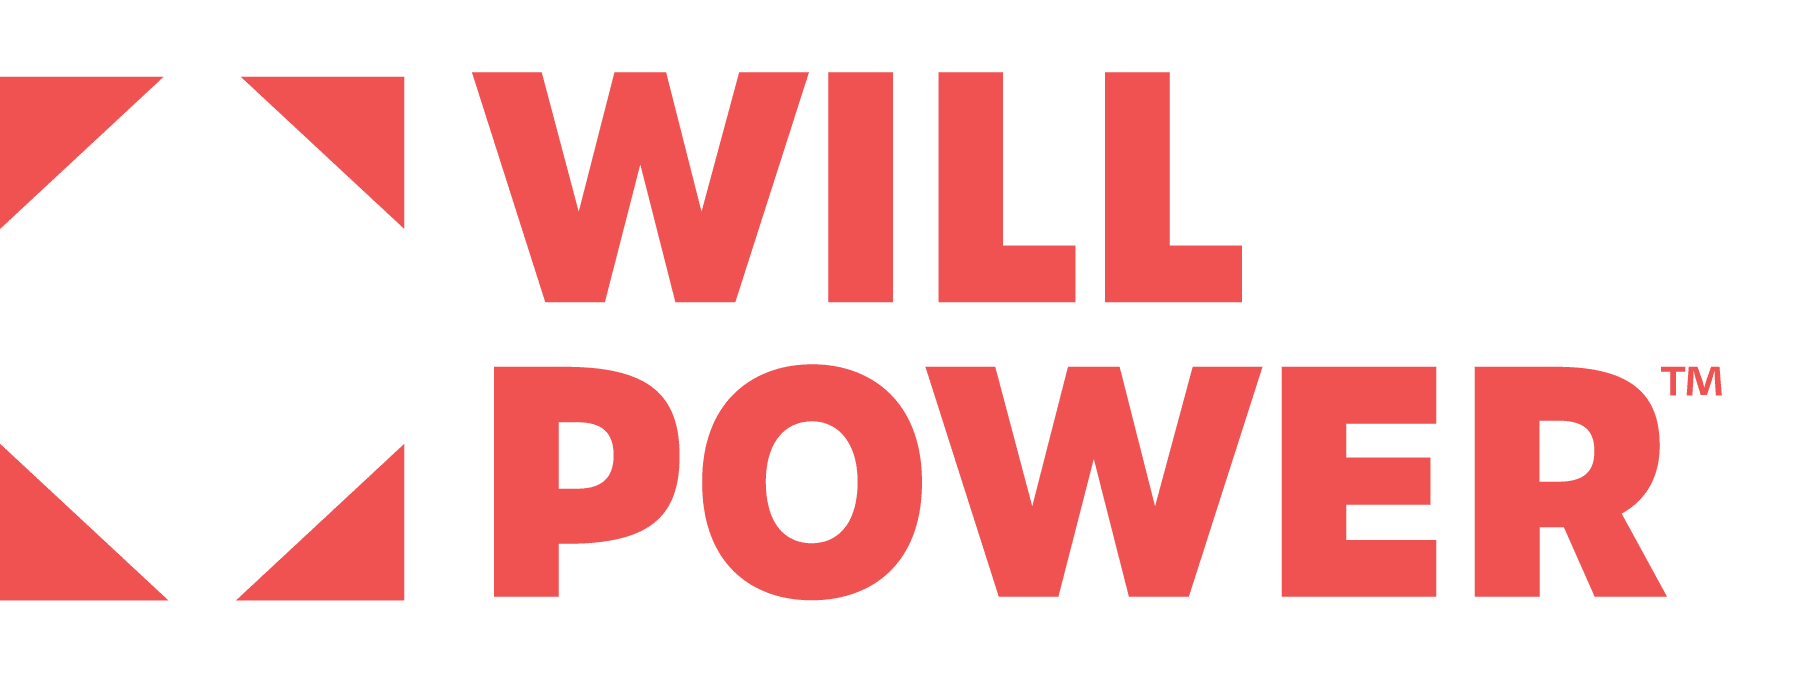 Will Power logo